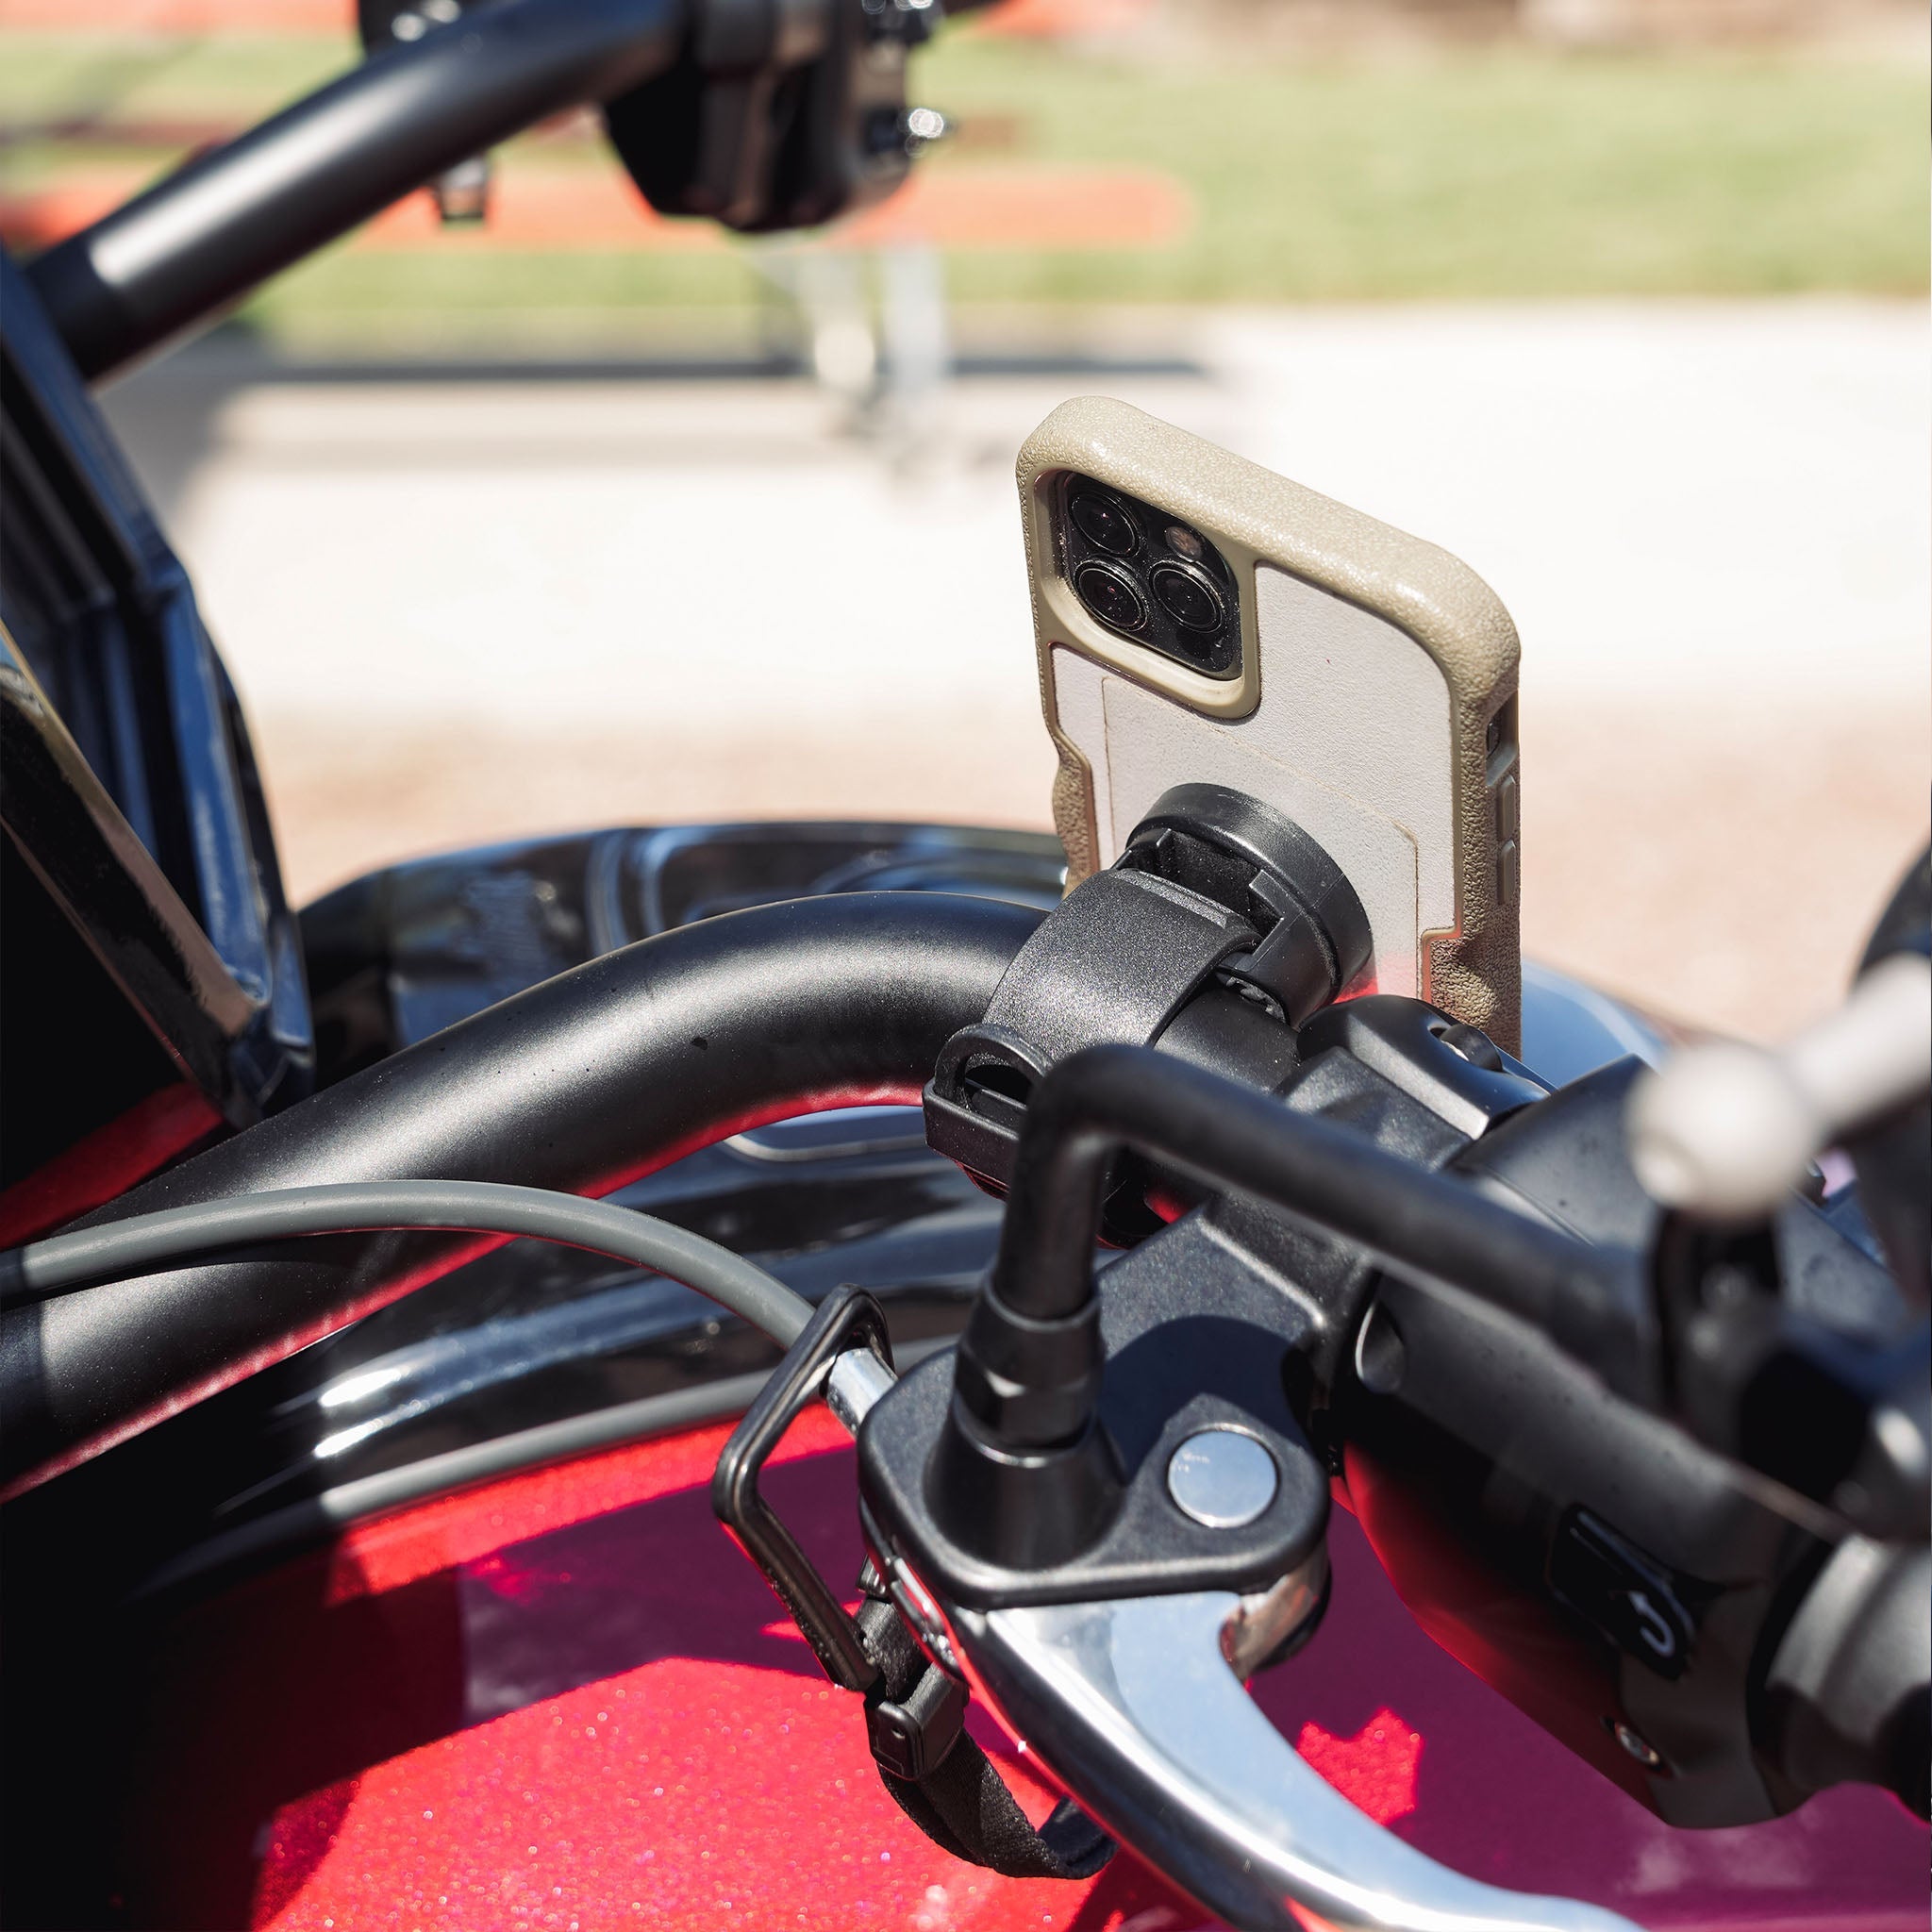 nomad™ Universal Magnetic Phone Mount on bike with phone (nomad™ on bike with phone)